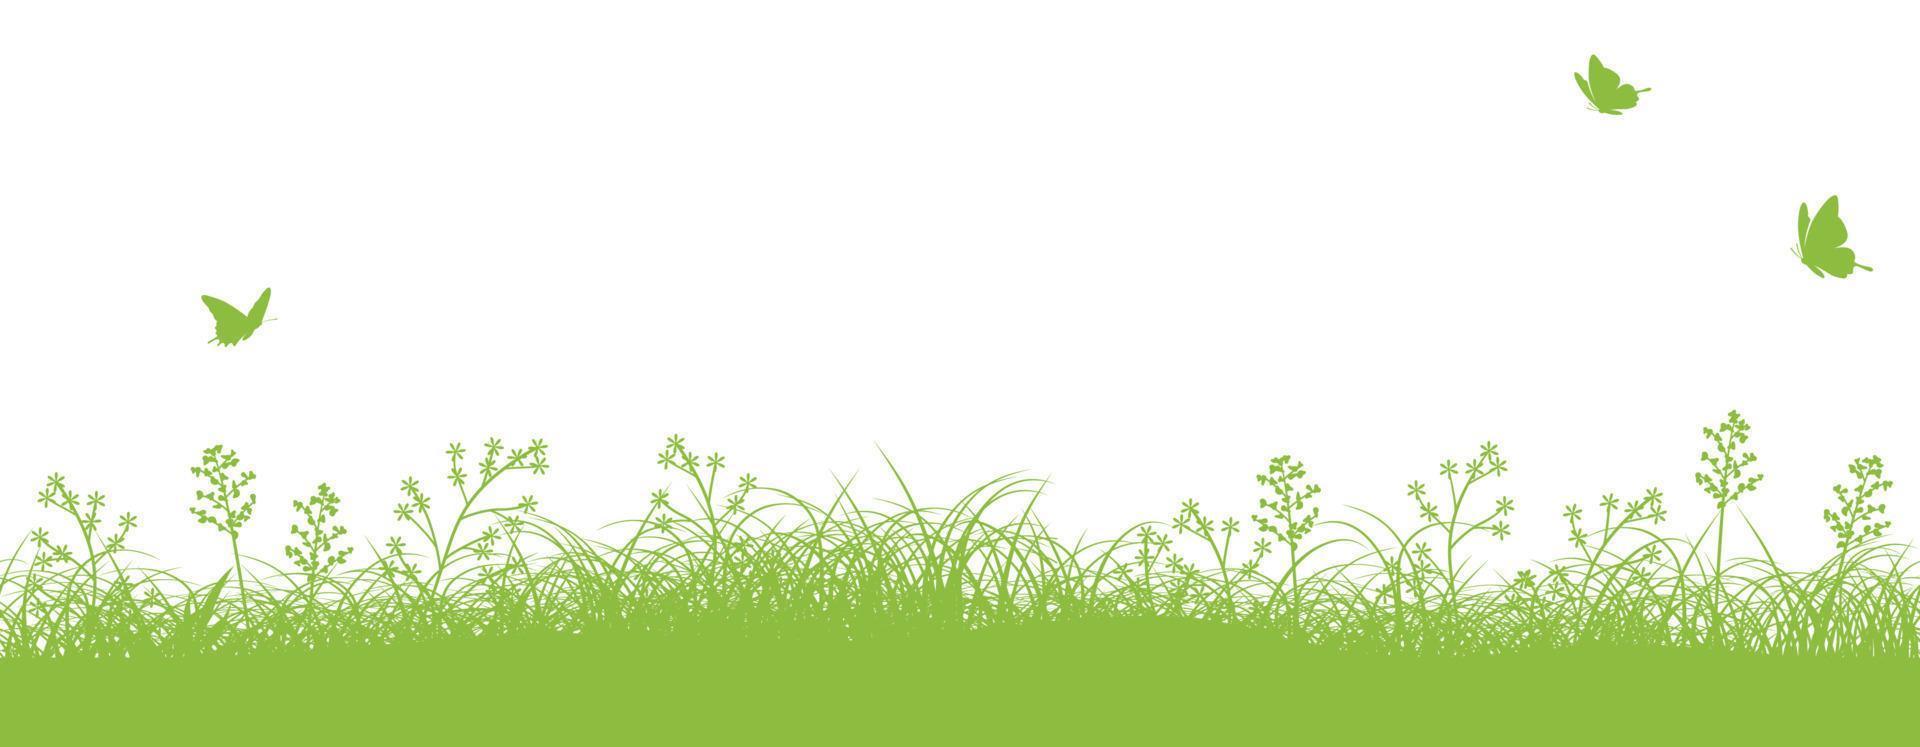 Ilustración de fondo de vector de campo de hierba verde transparente con espacio de texto. horizontalmente repetible.